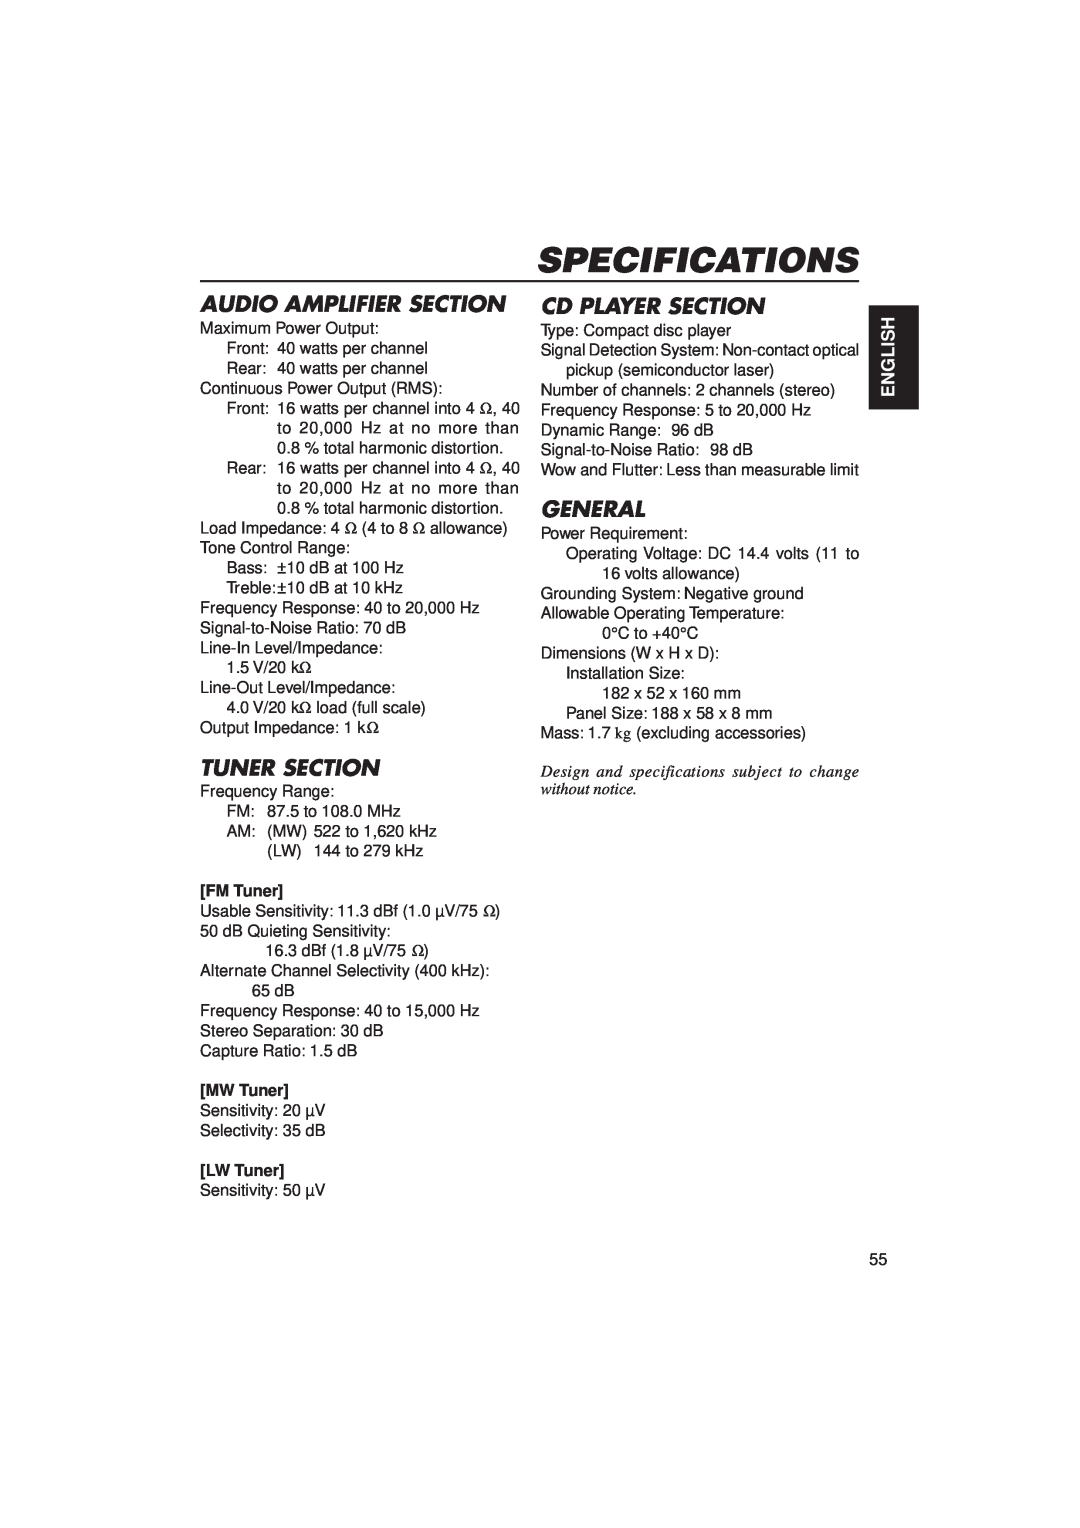 JVC KD-LX3R manual Specifications, English, FM Tuner, MW Tuner, LW Tuner 